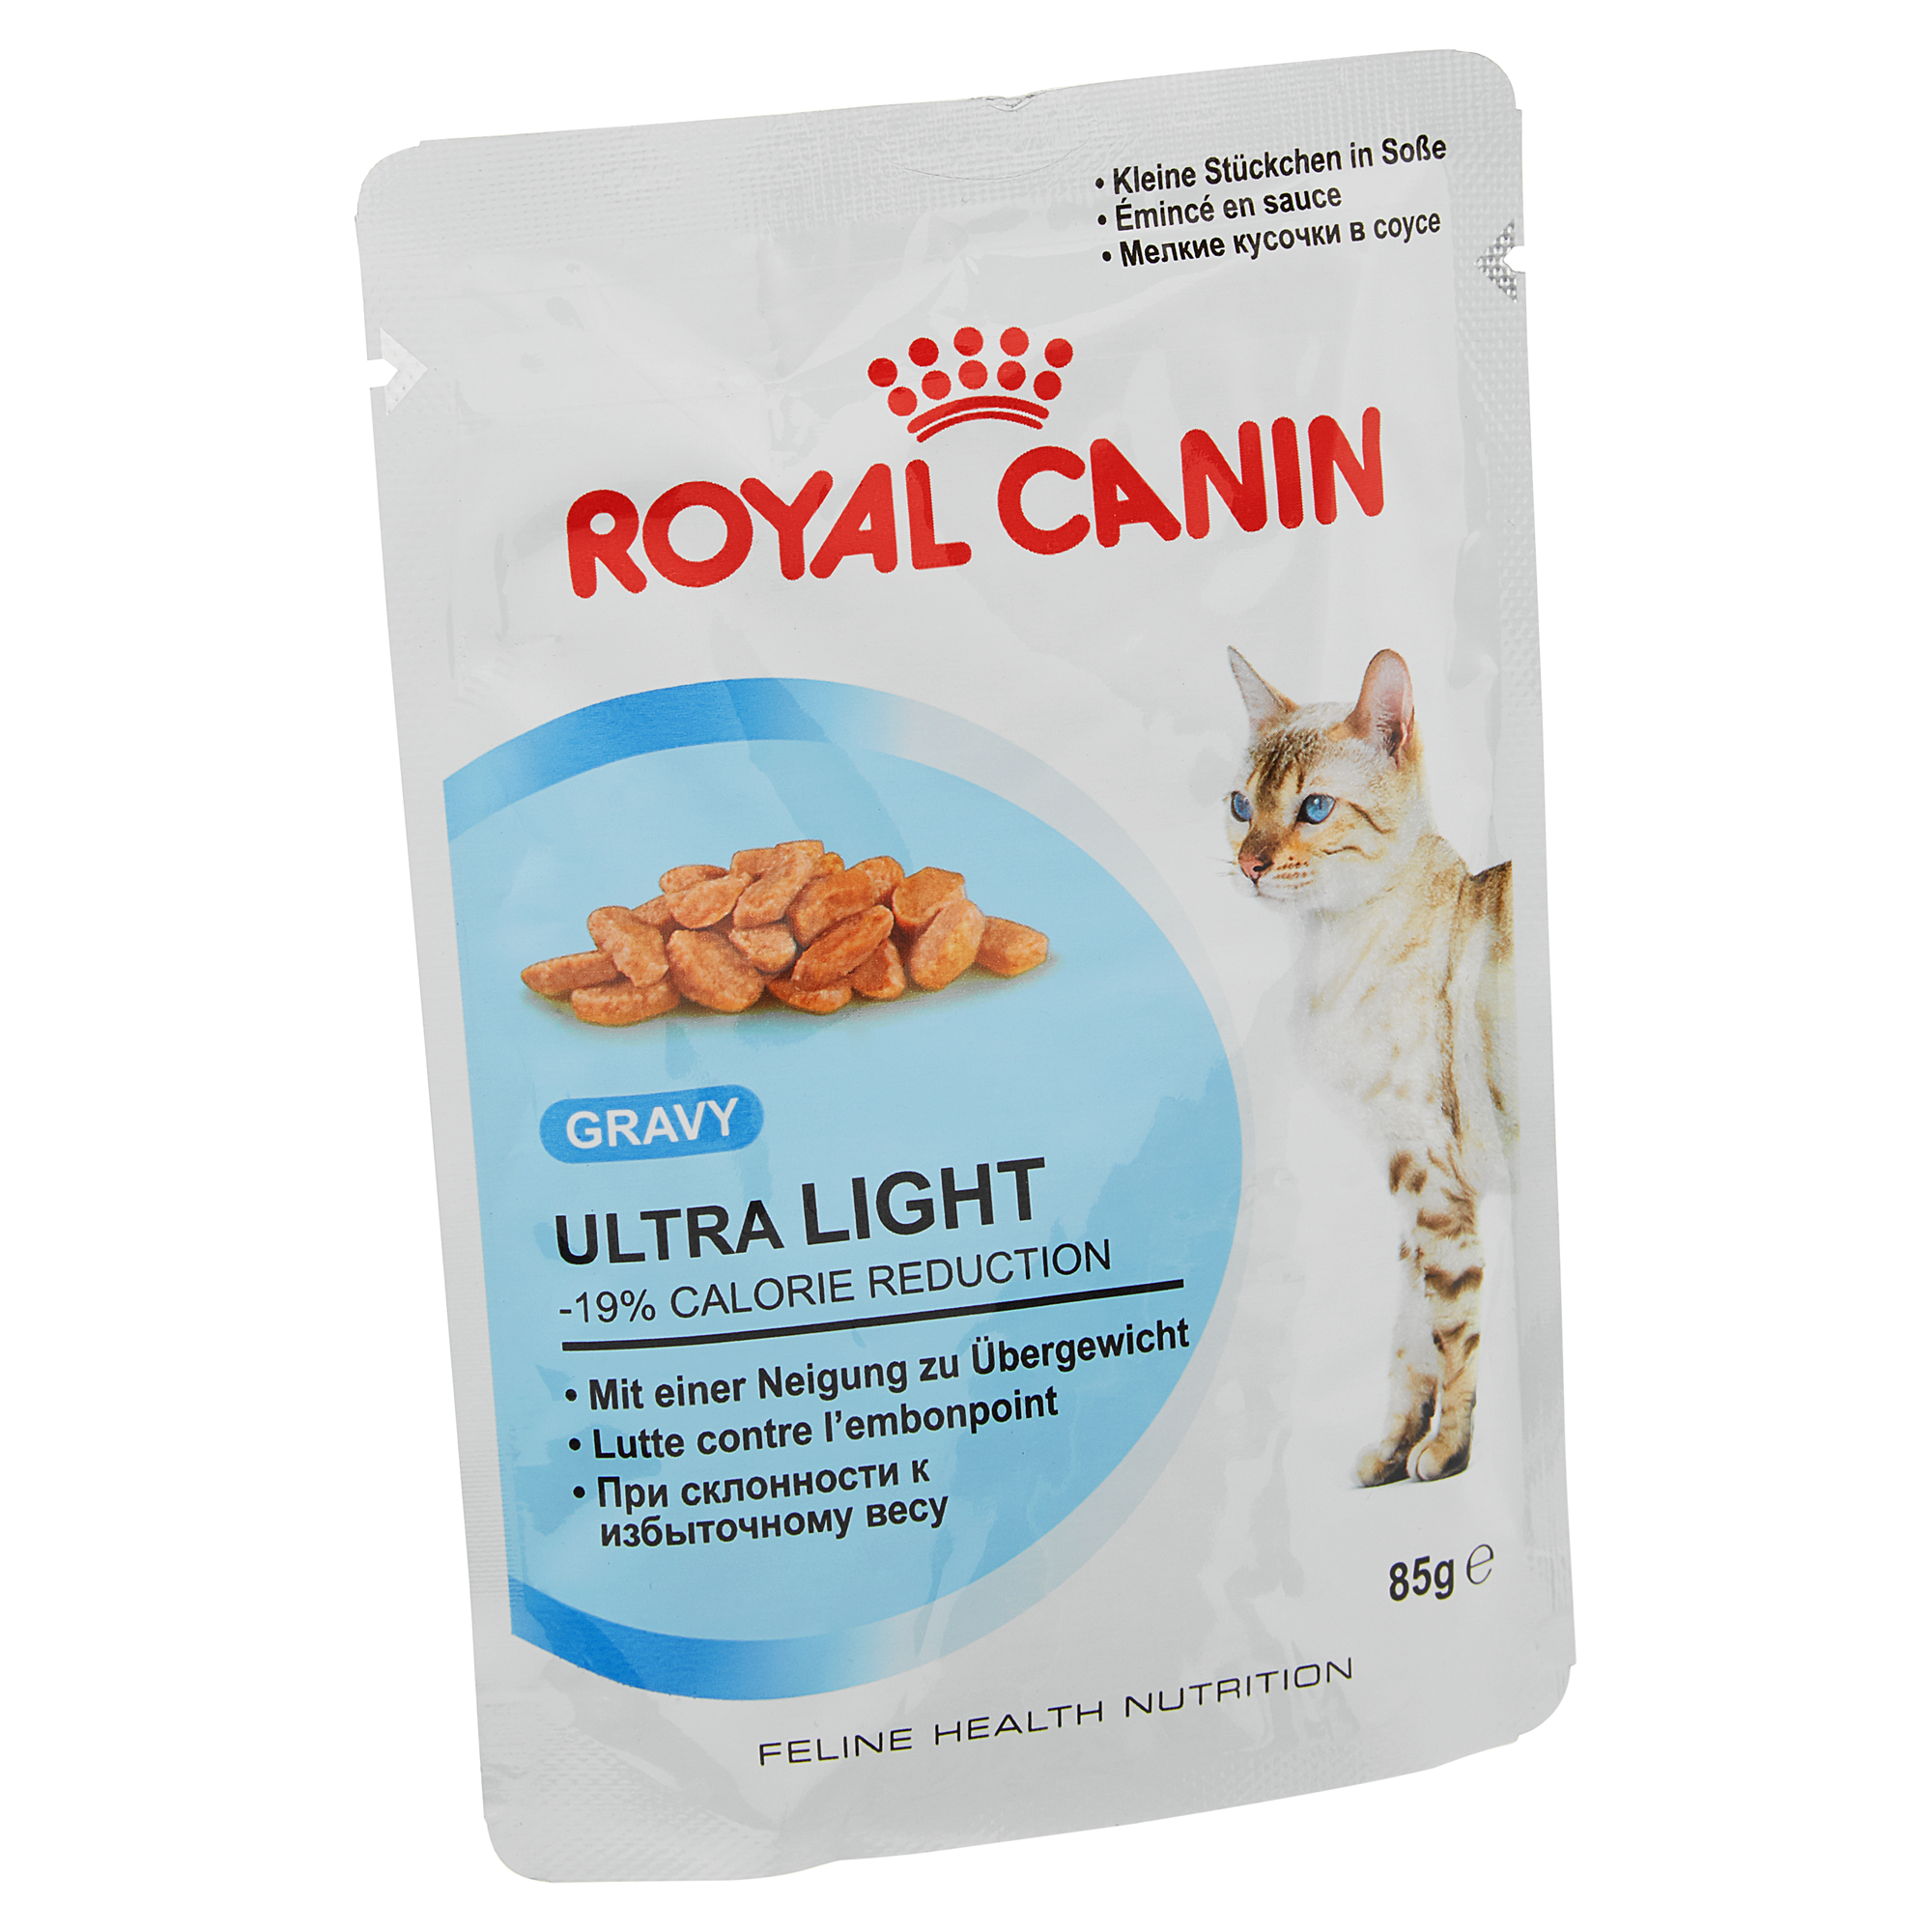 Katzennassfutter "Feline Health Nutrition" Ultra Light 85 g + product picture